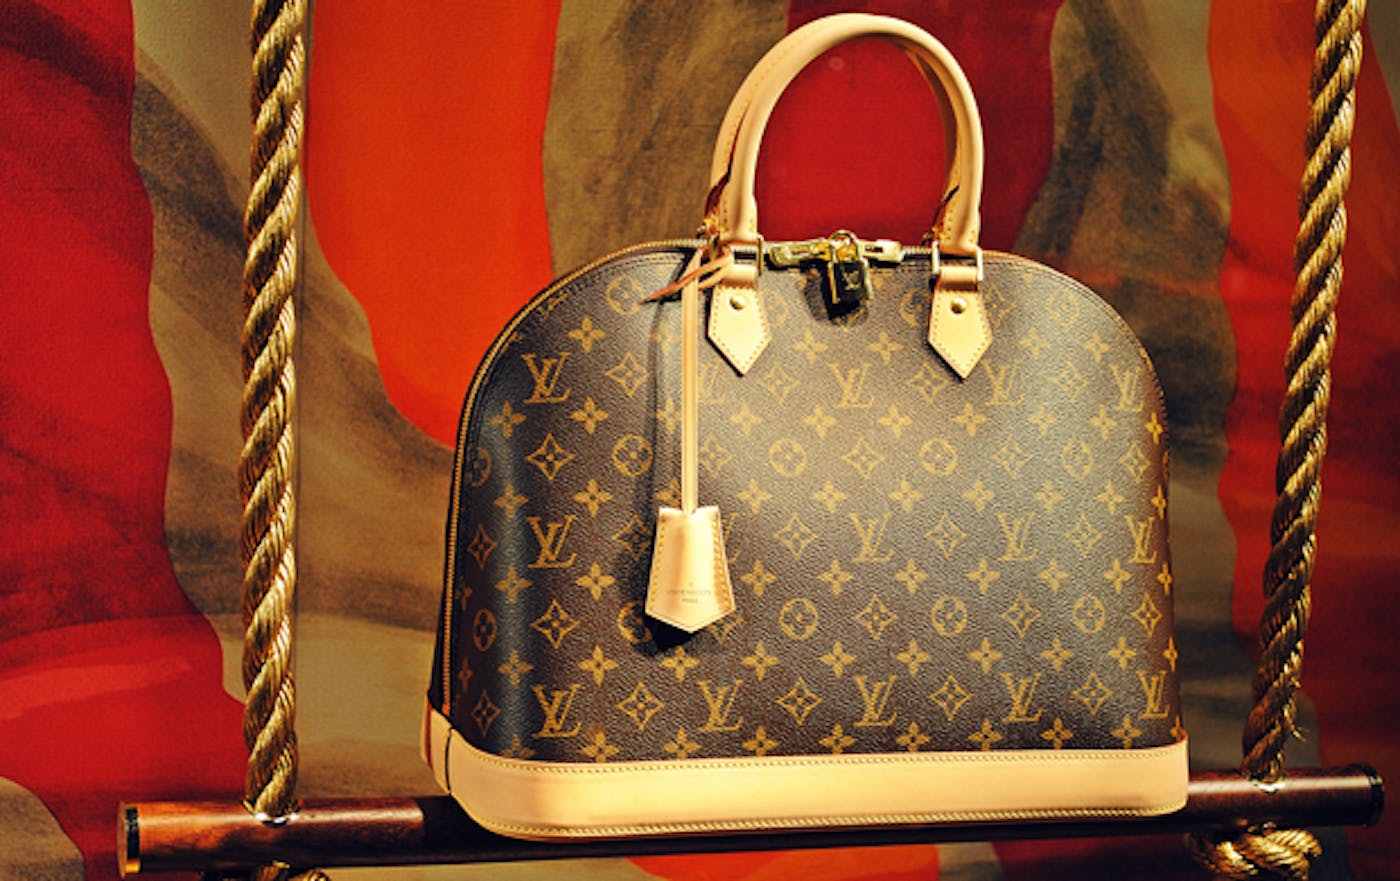 Louis Vuitton Bag Price in Philippine Peso 